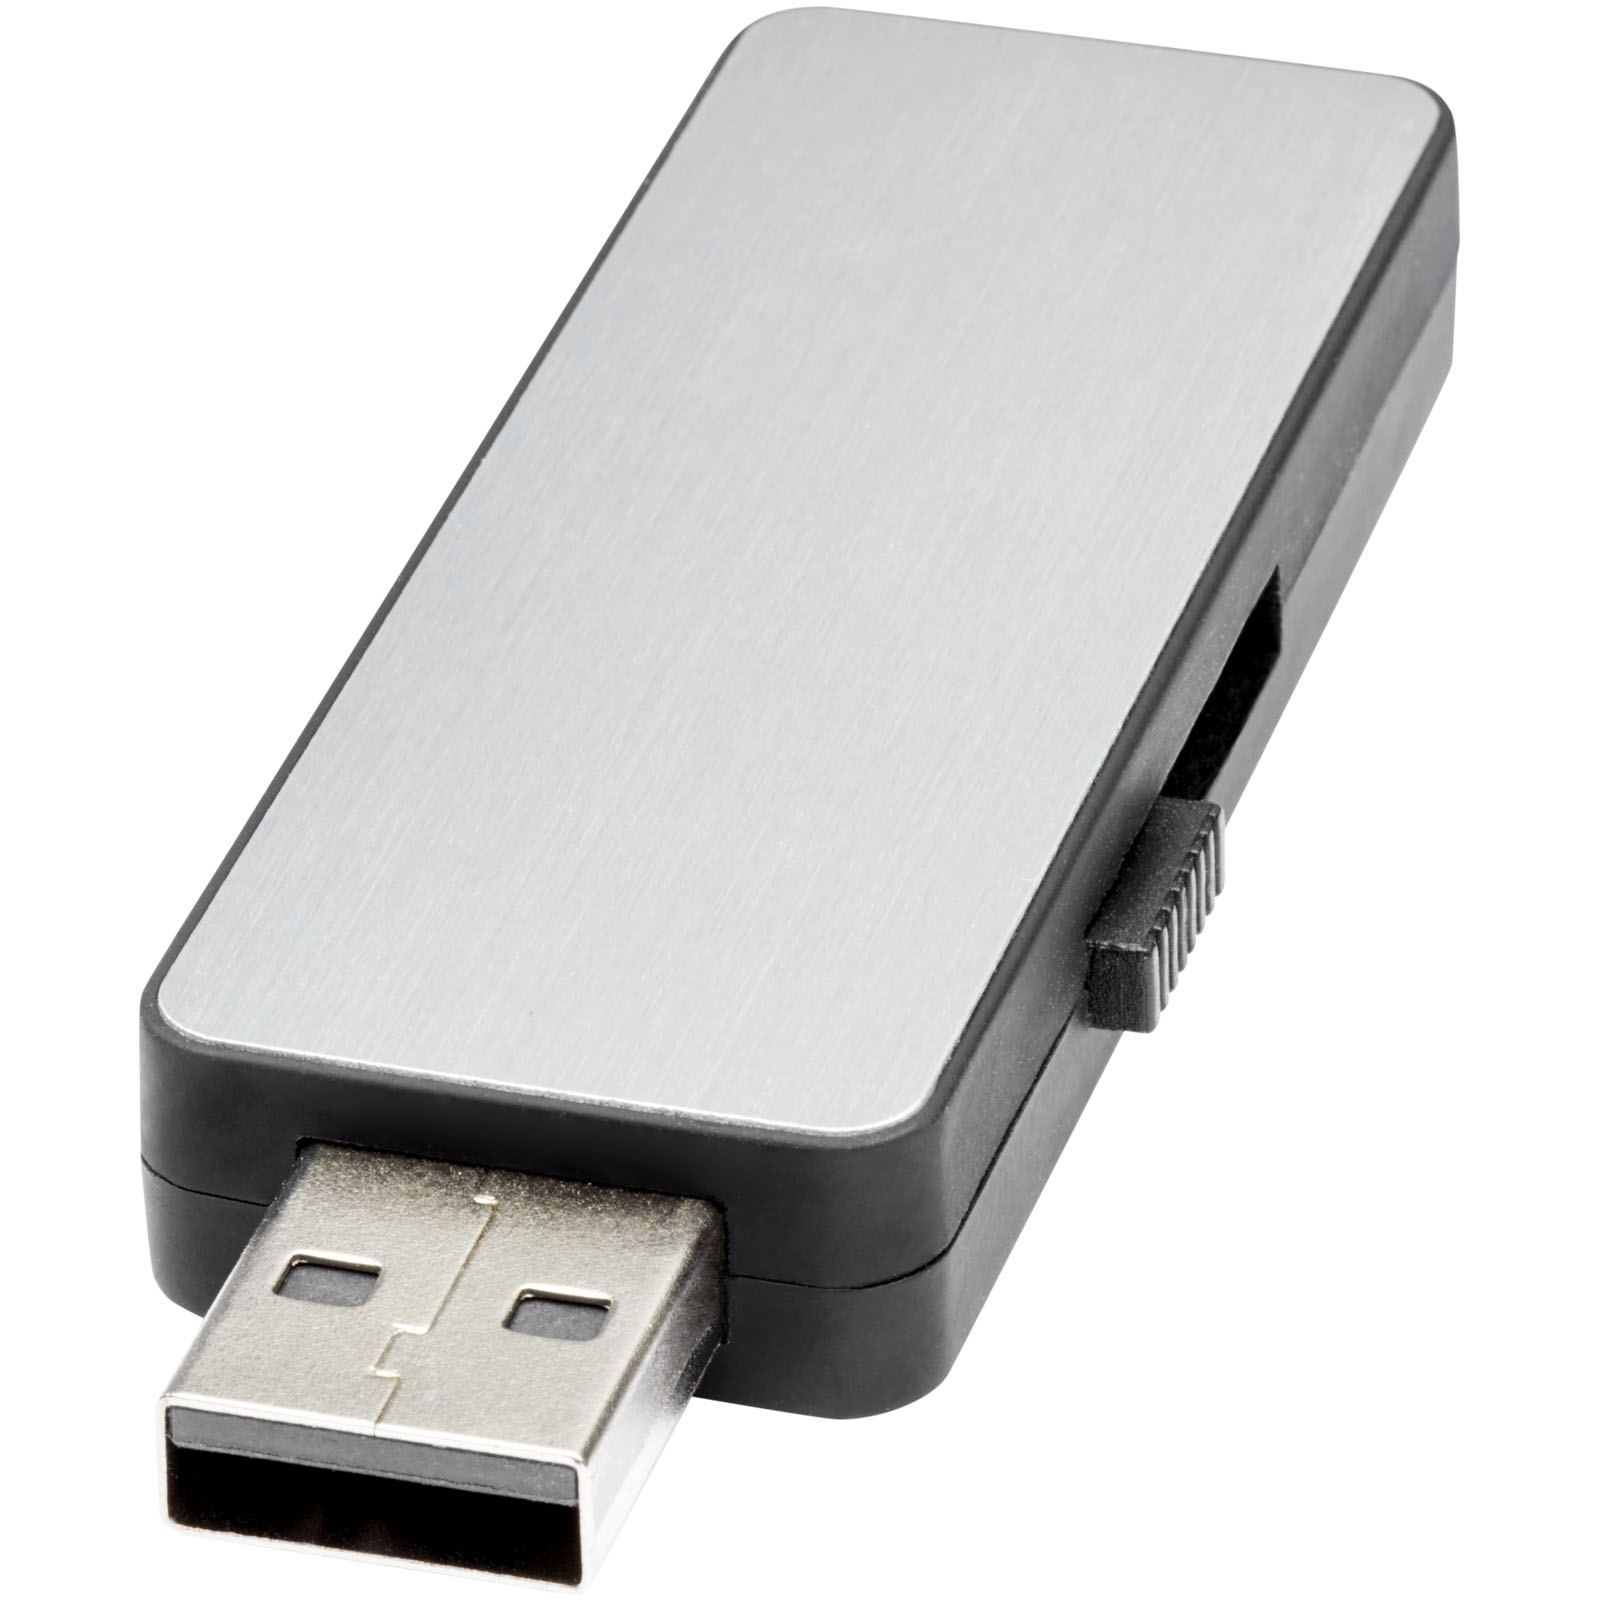 Lumina USB - Bransgore - Sella